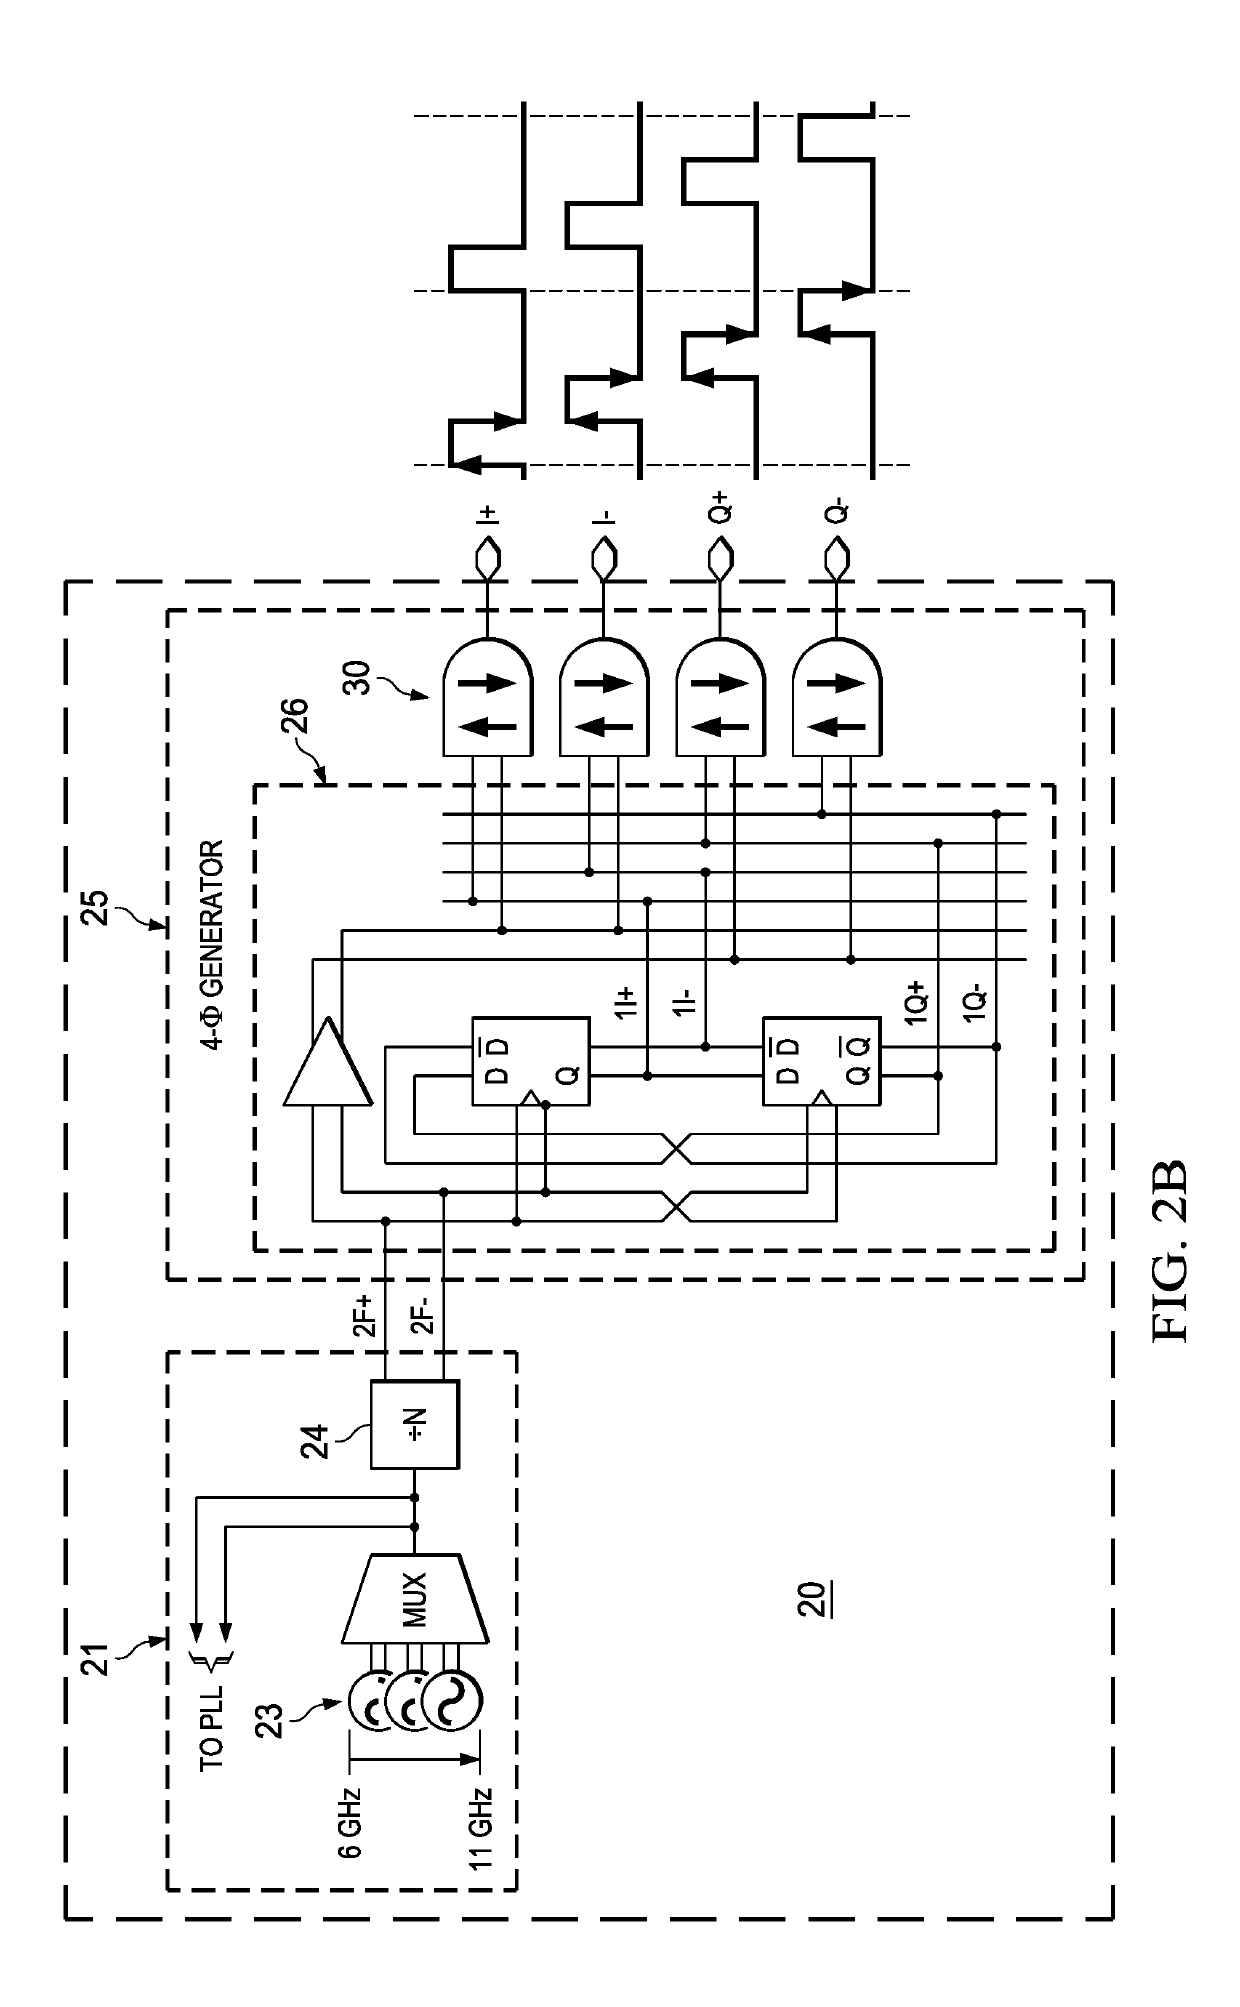 Oscillator with pulse-edge tuning